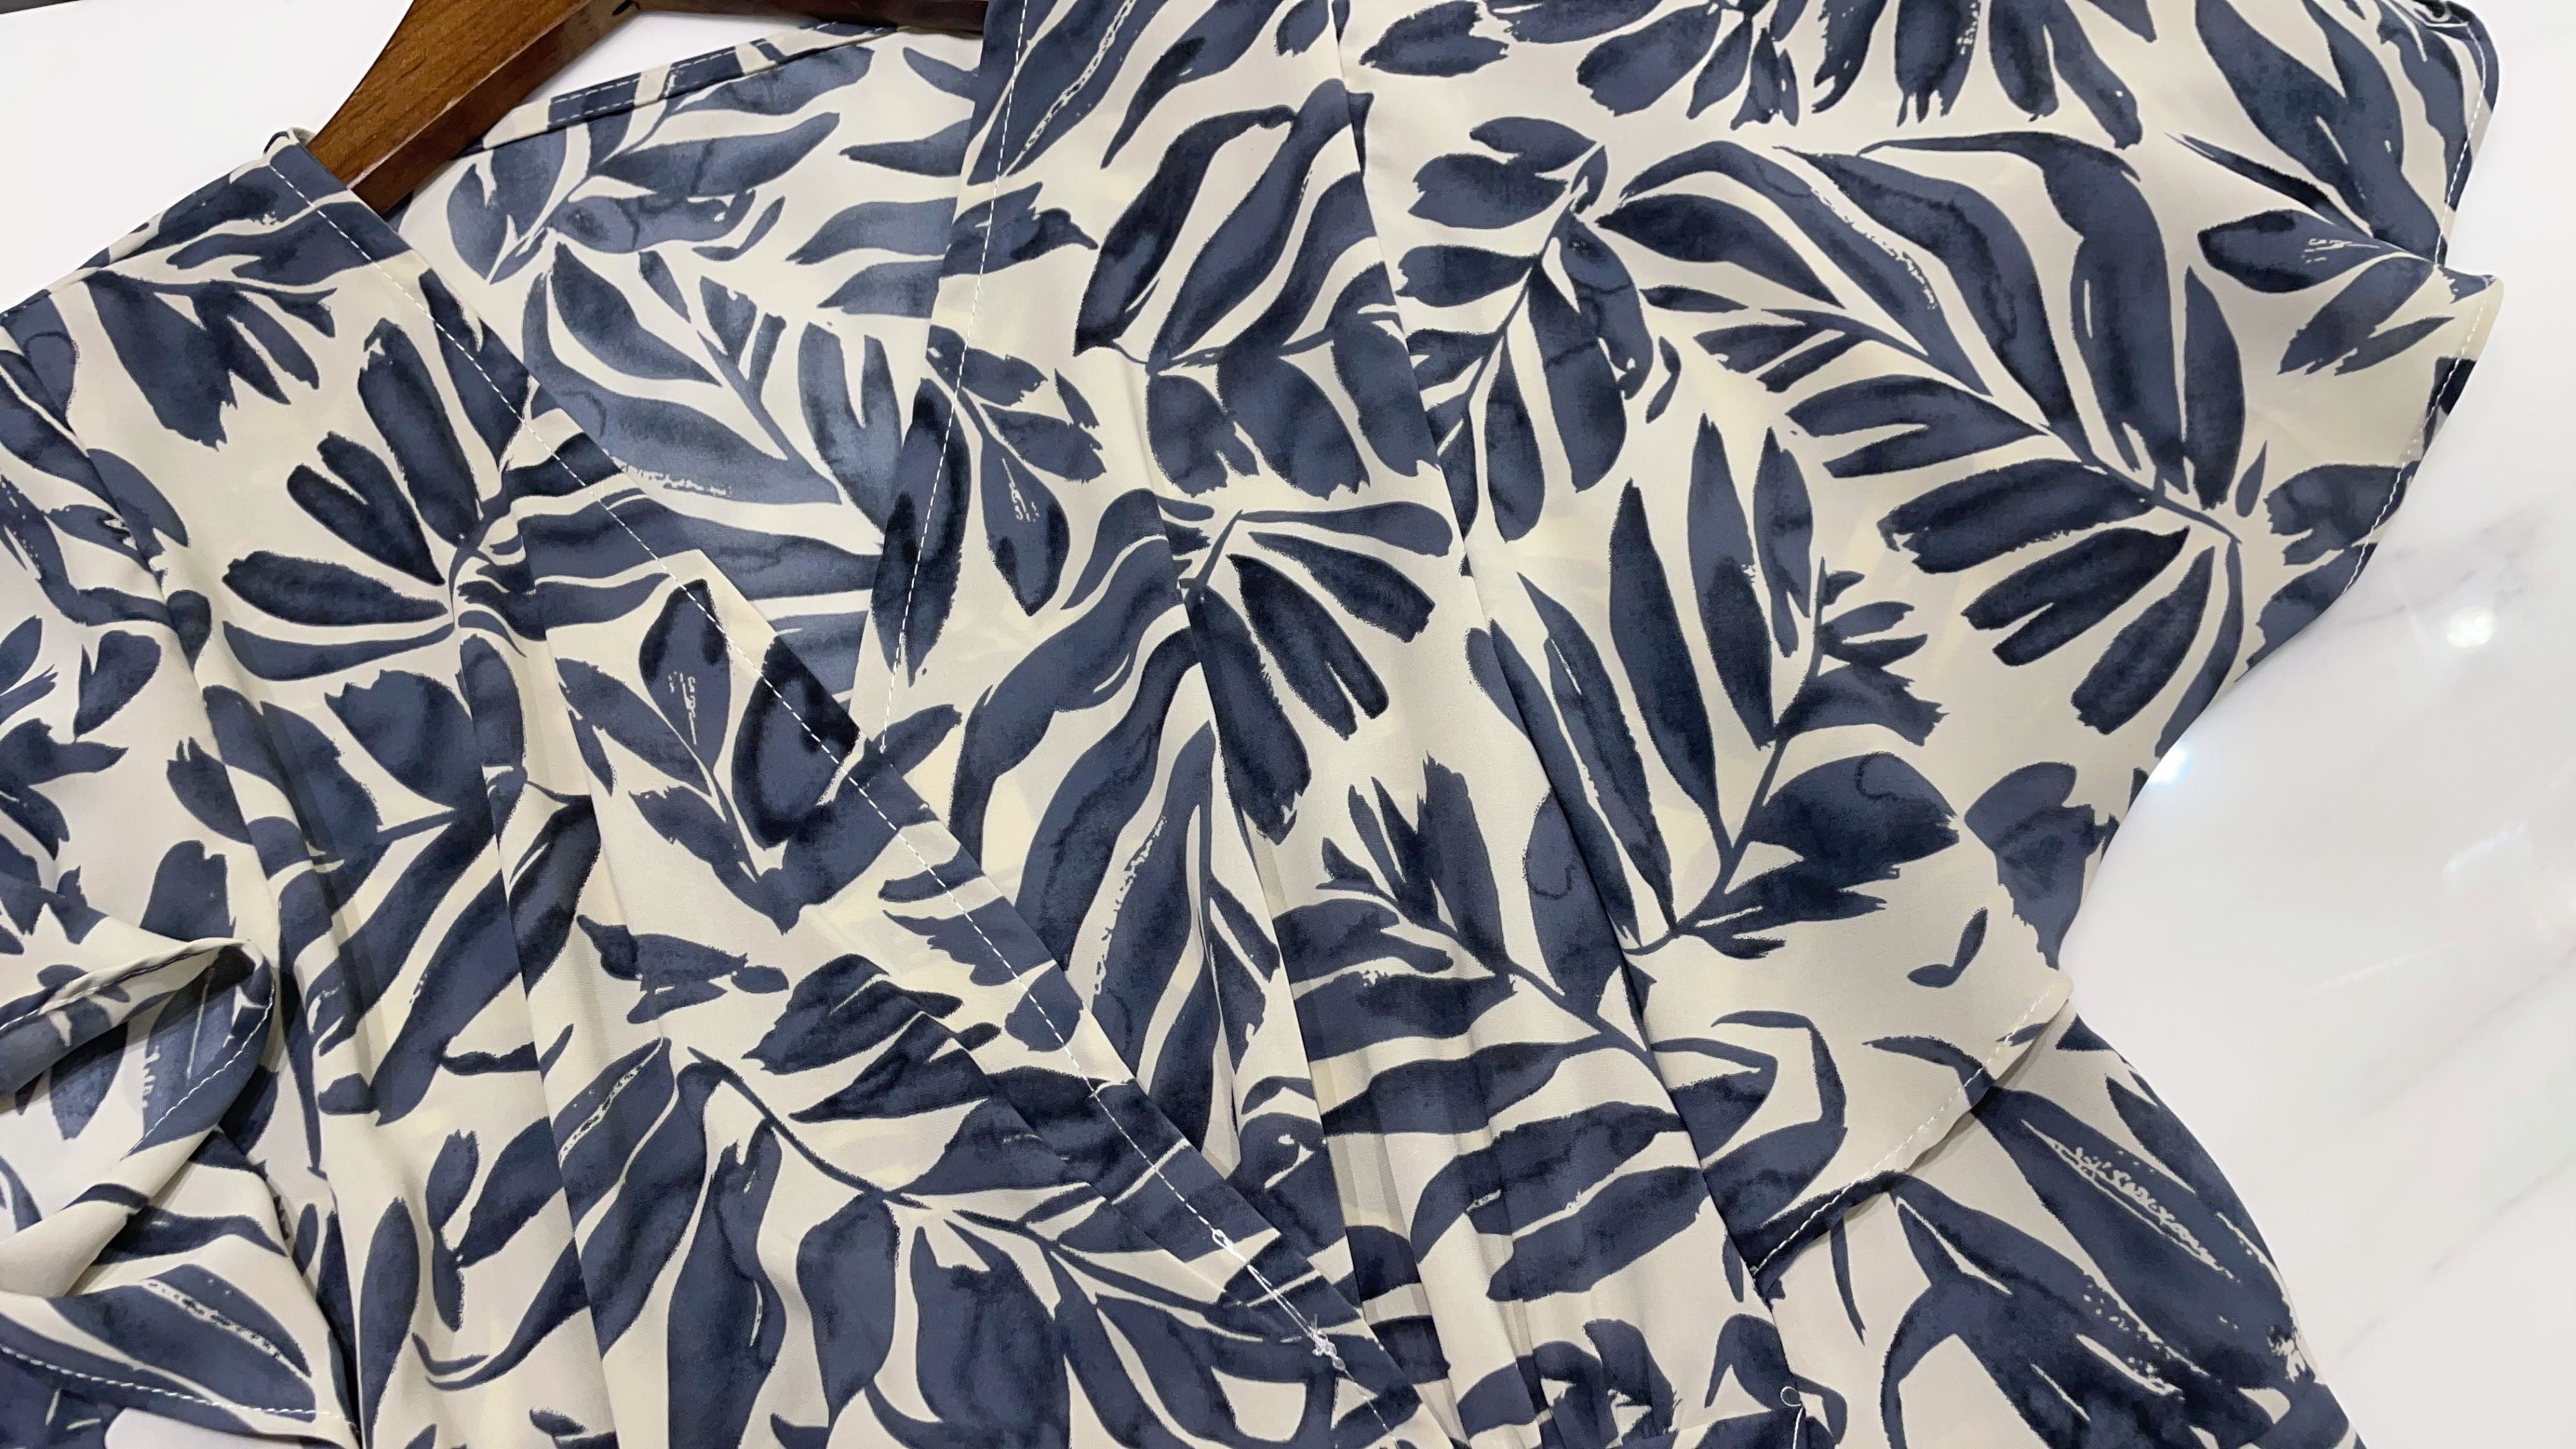 Ink Leaf 藍色水彩印花疊領口傘袖連身裙, Dress/ DS9503